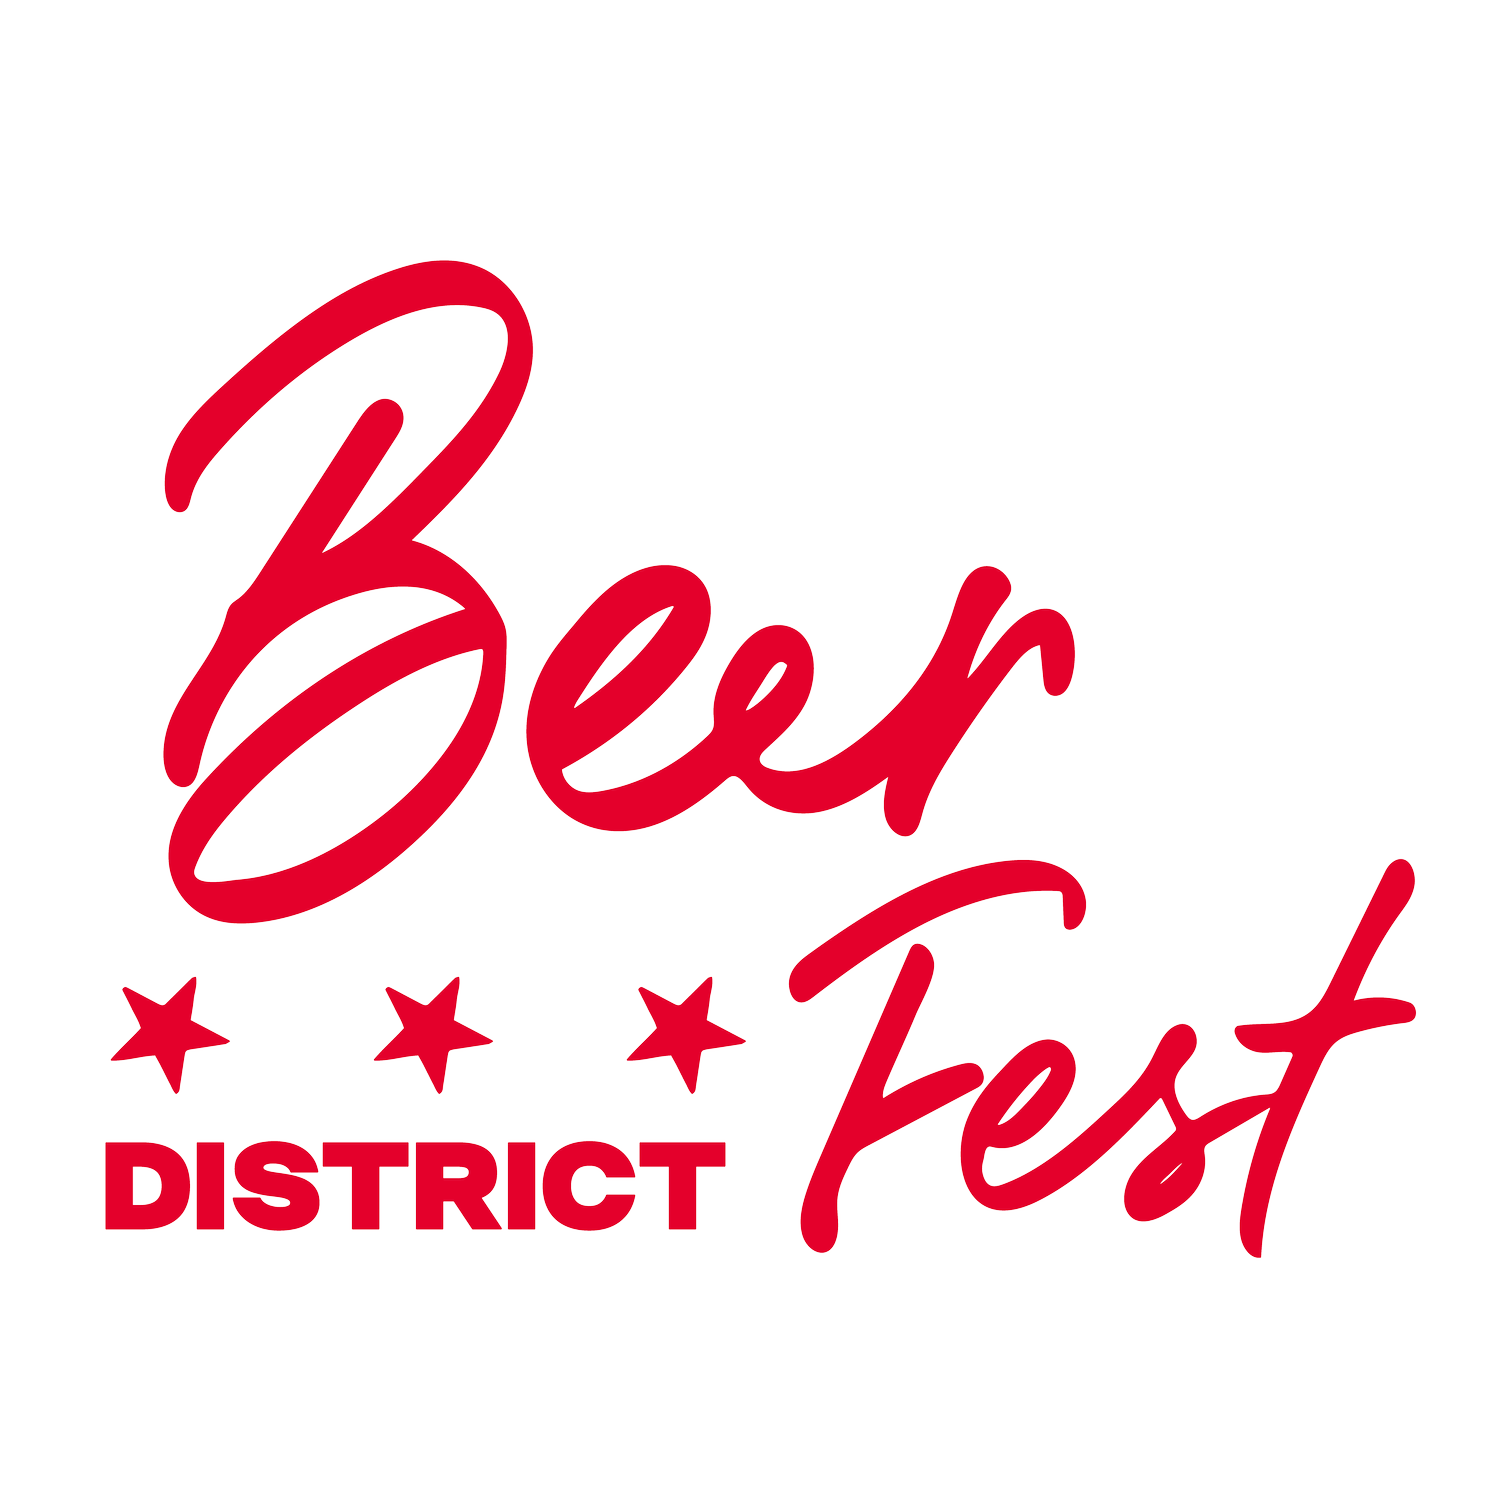 District Beerfest